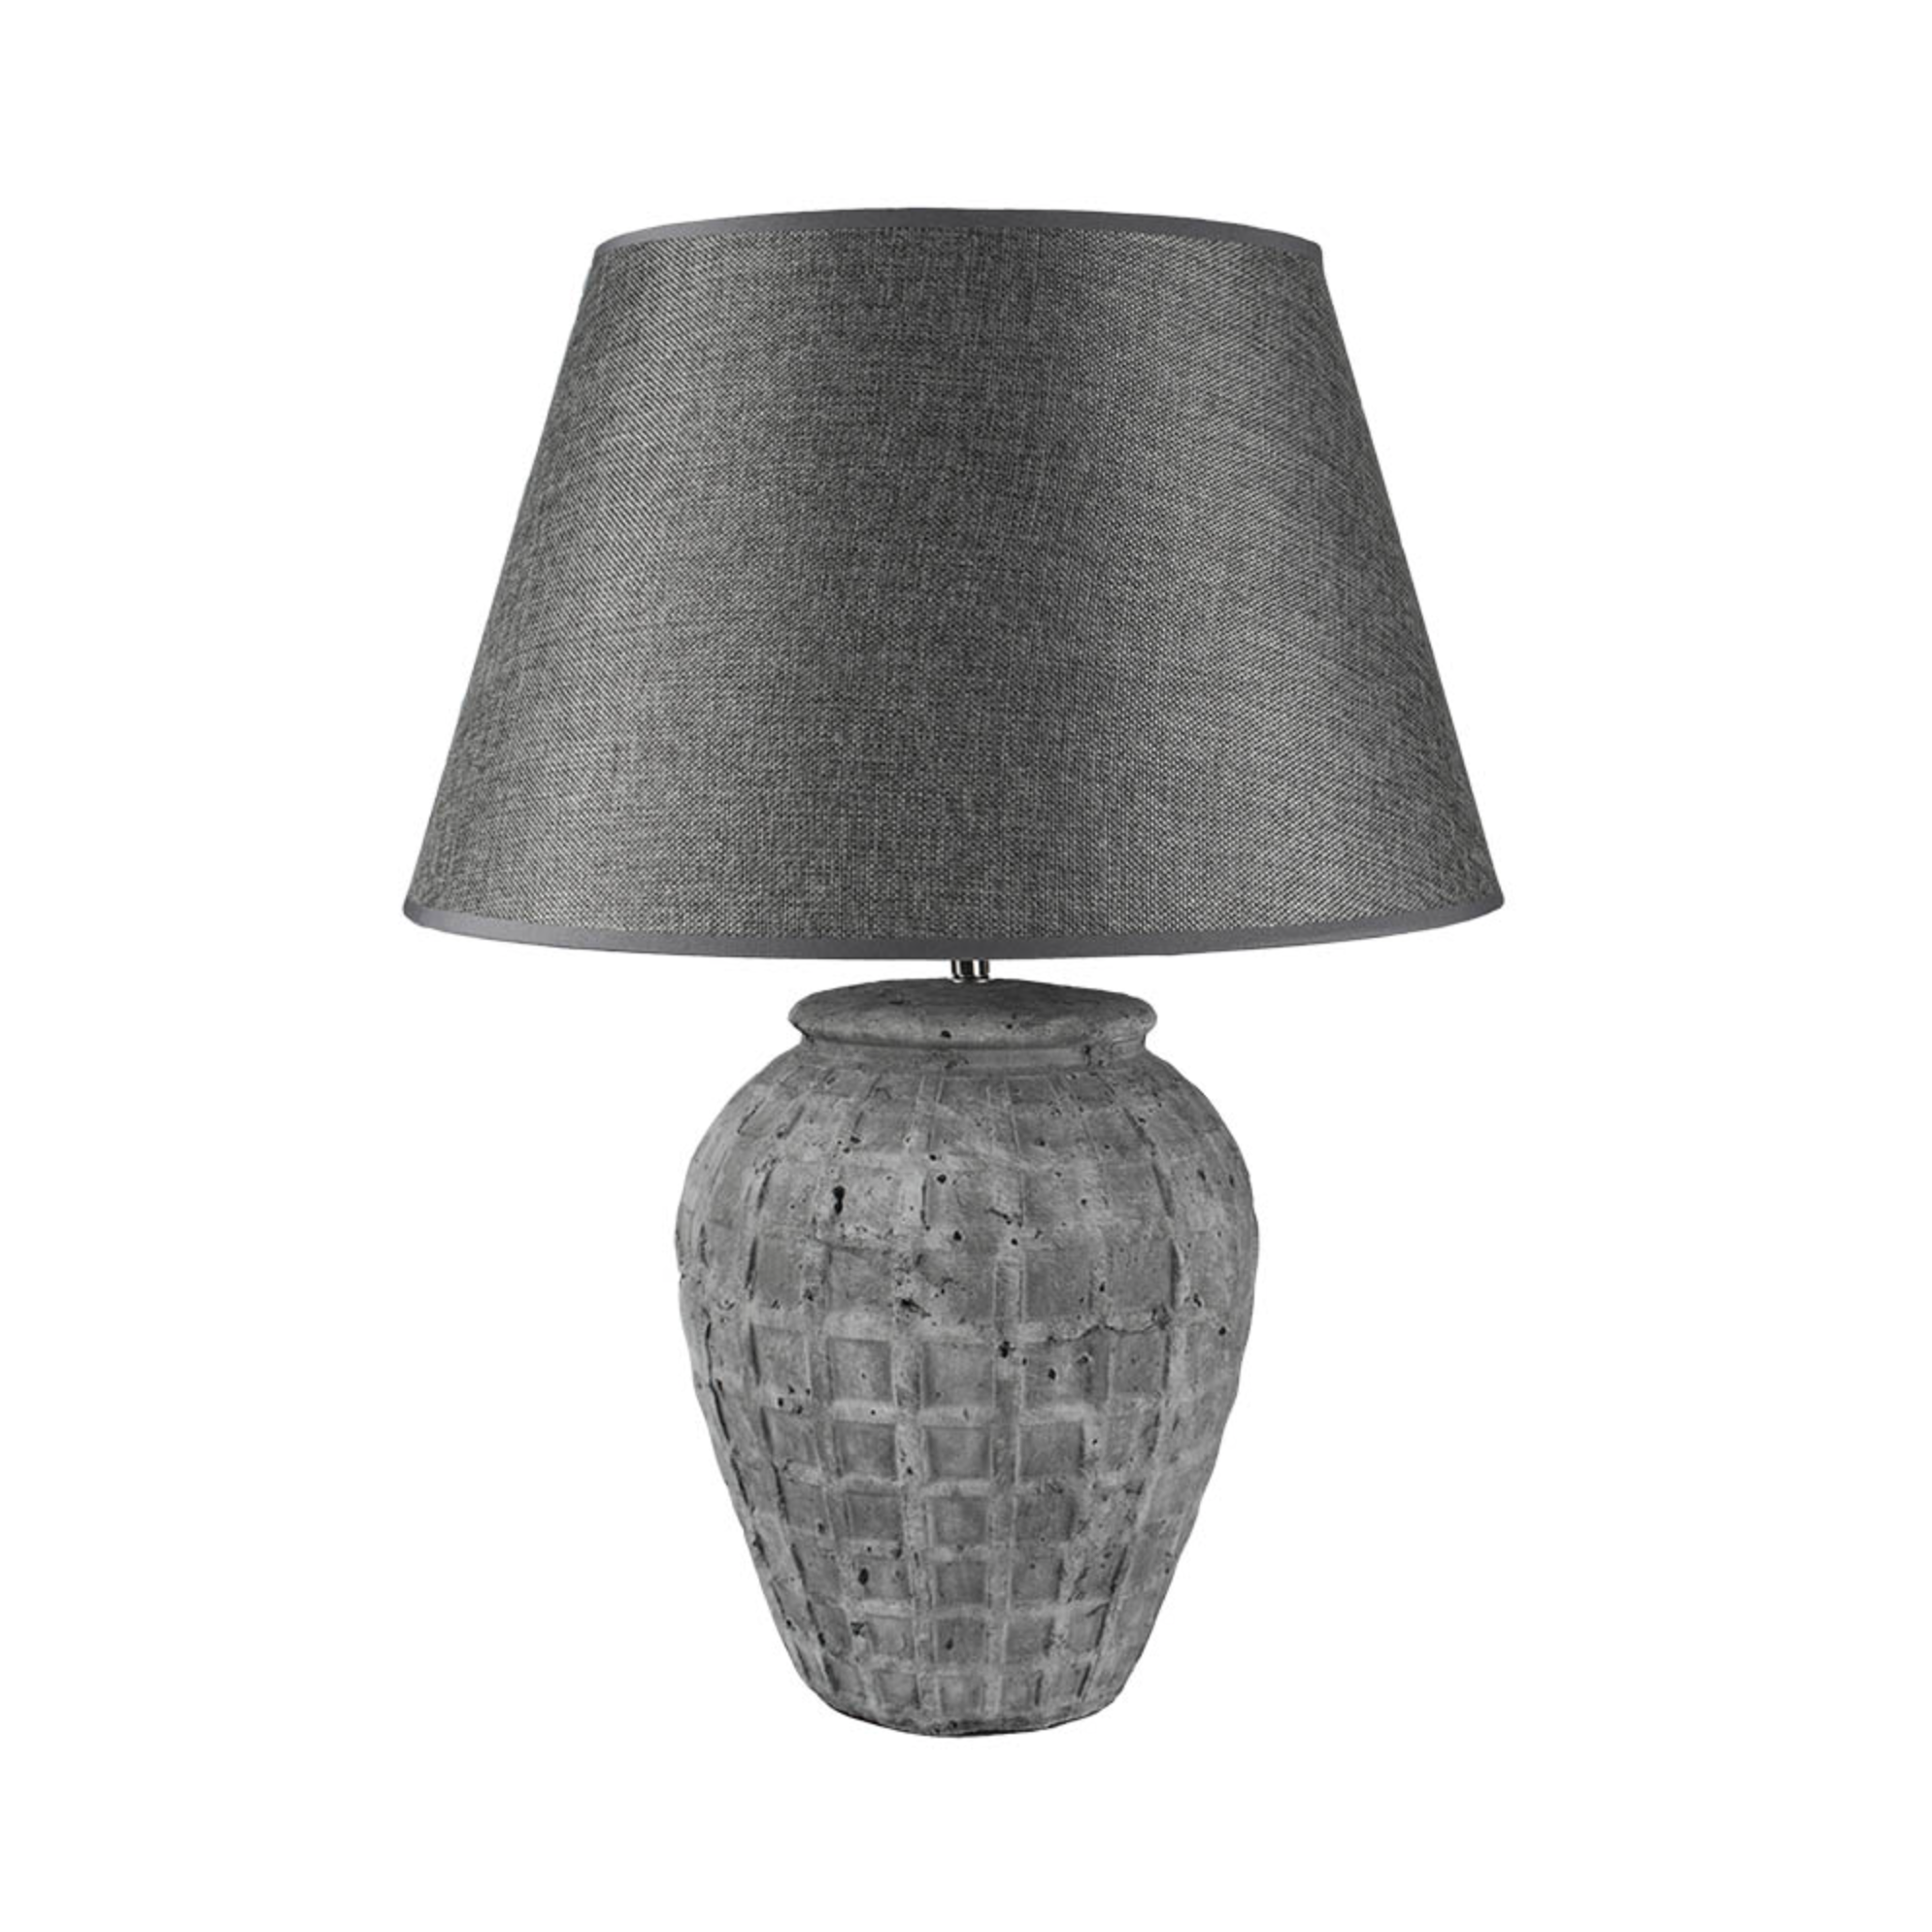 Grey Geometric Ceramic Lamp with Shade.